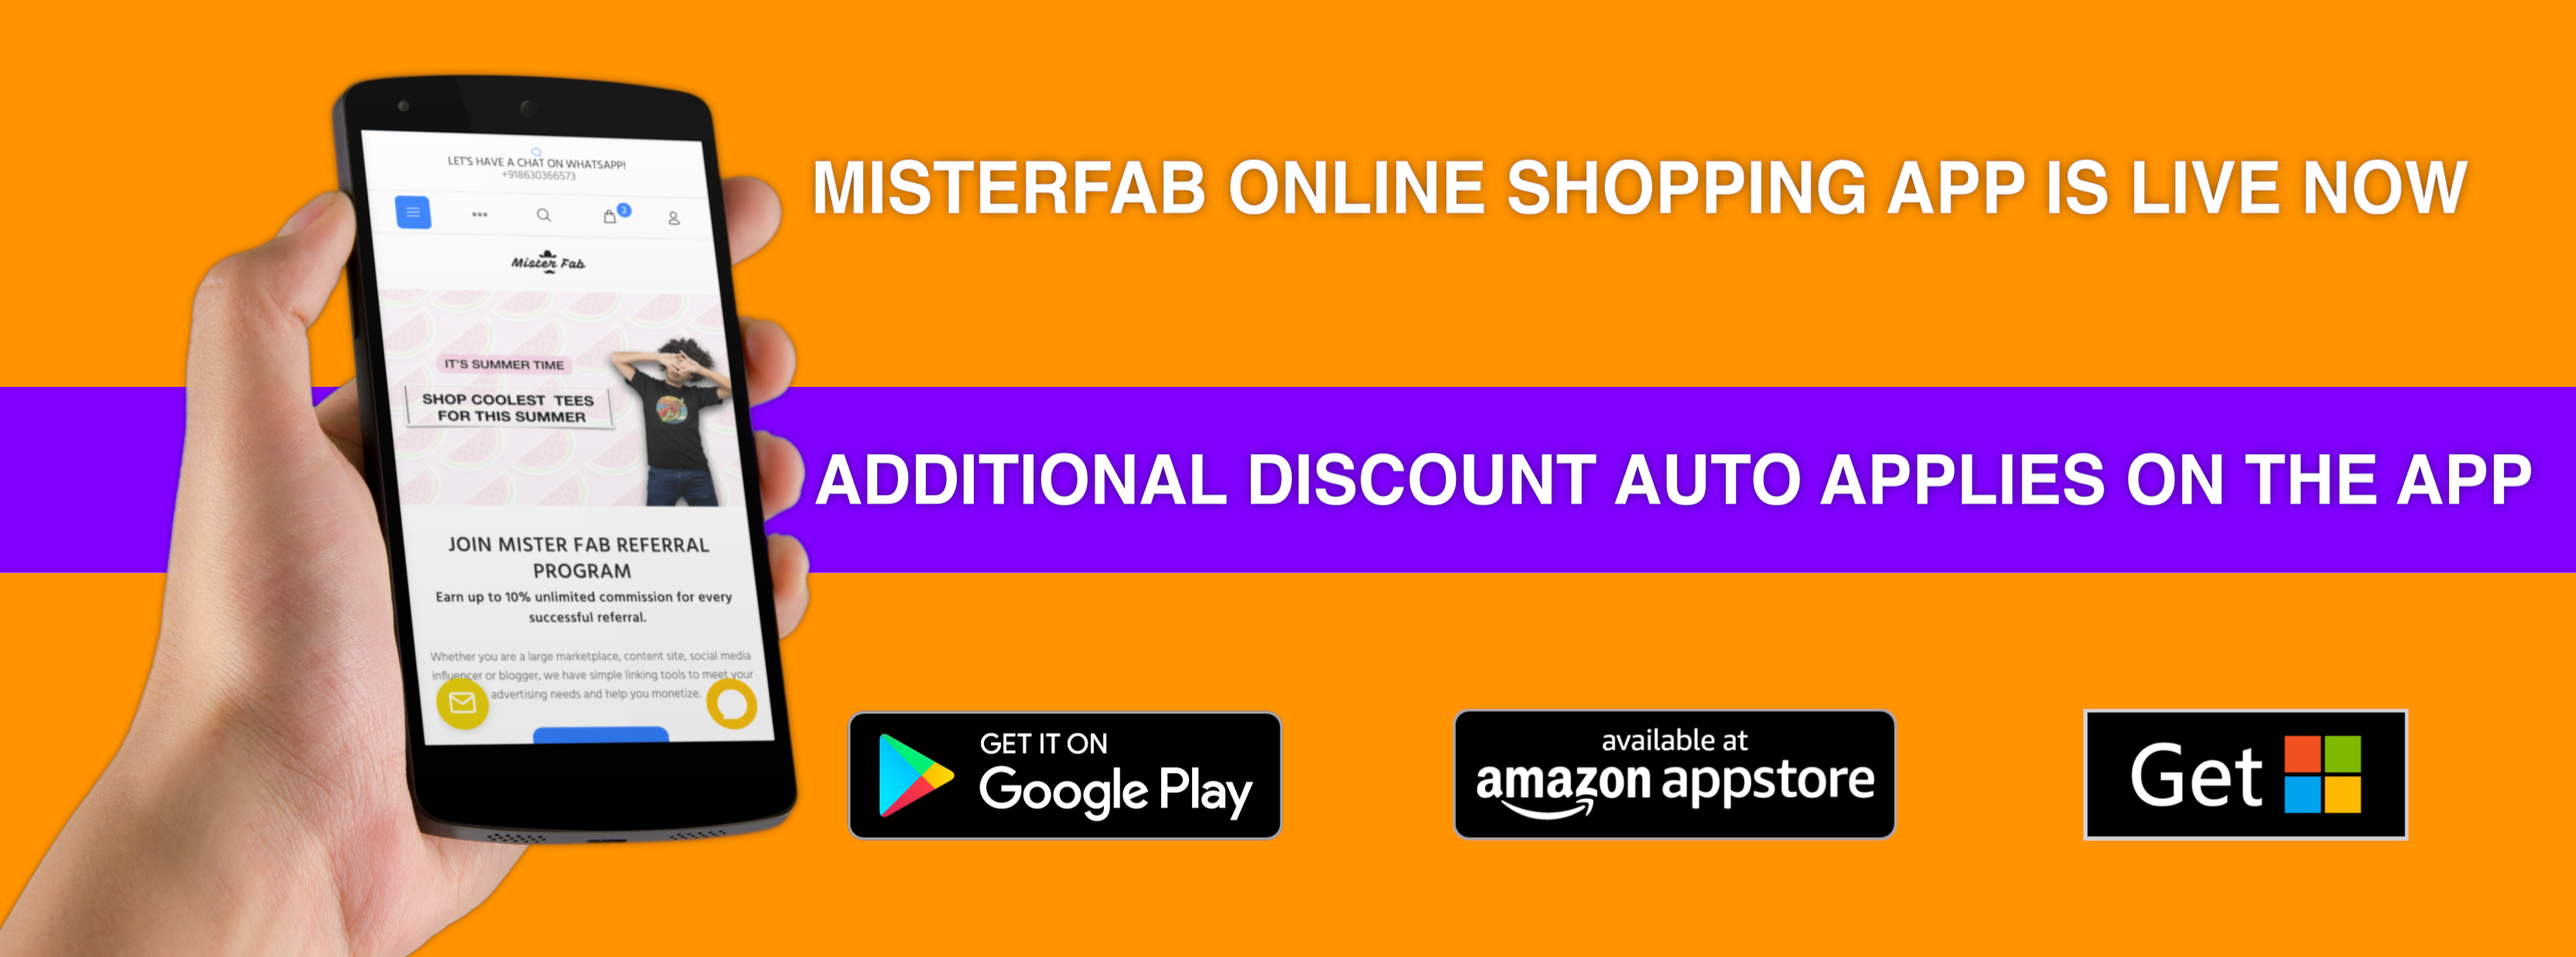 misterfab online shopping app